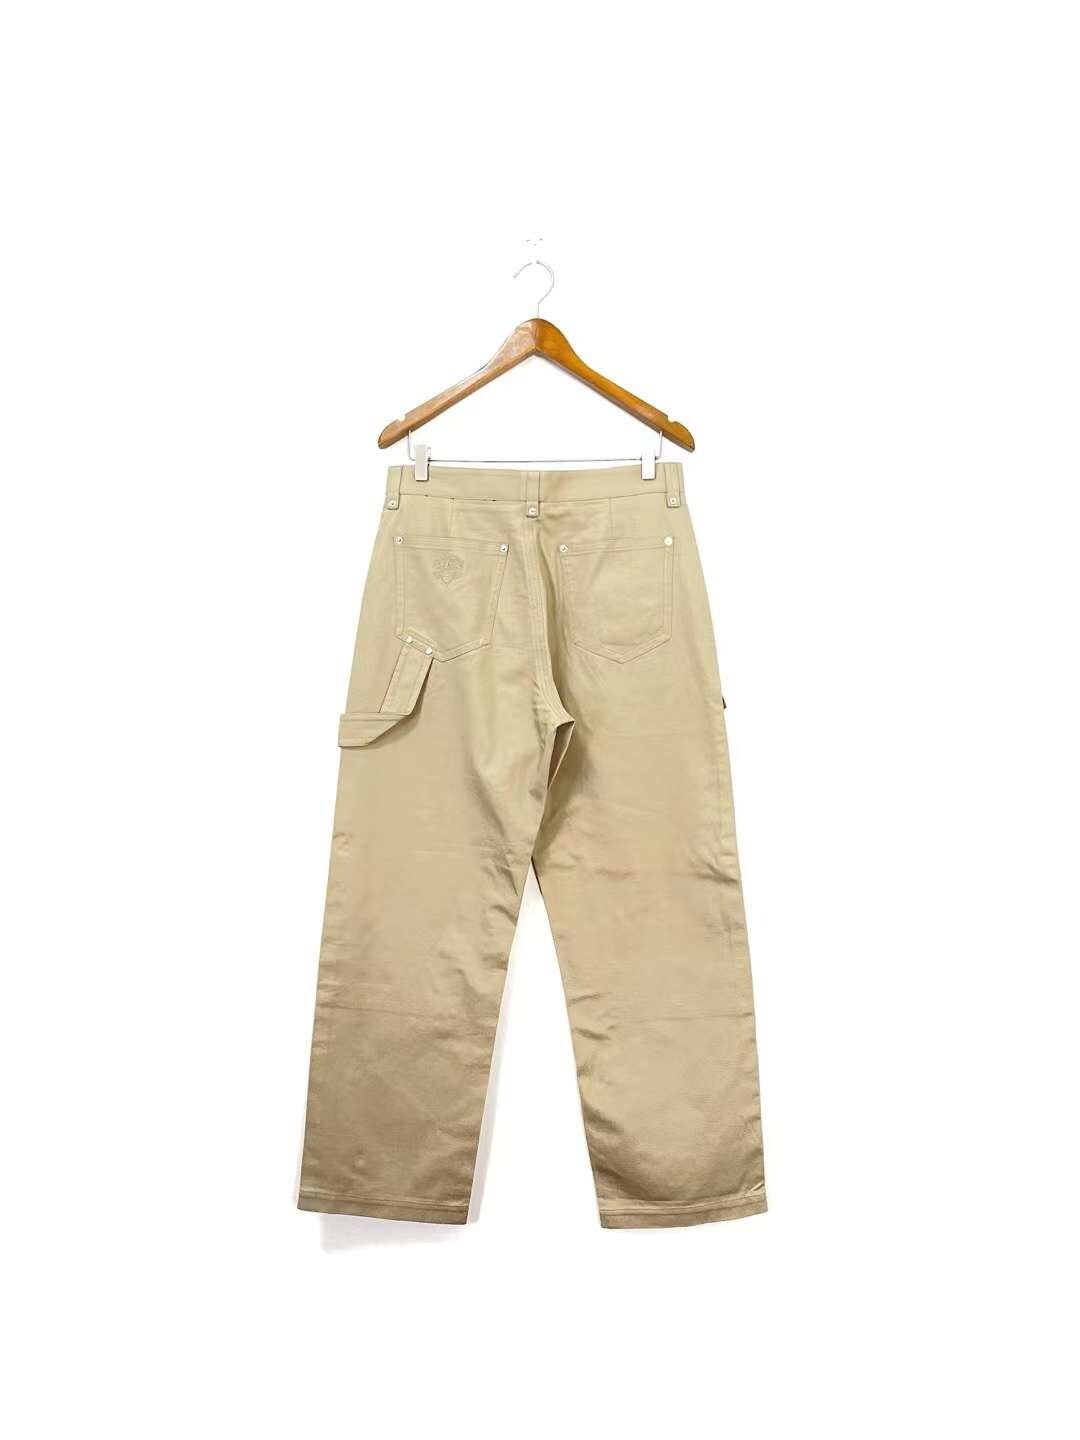 Khaki cargo pants with bee embroidery - 2